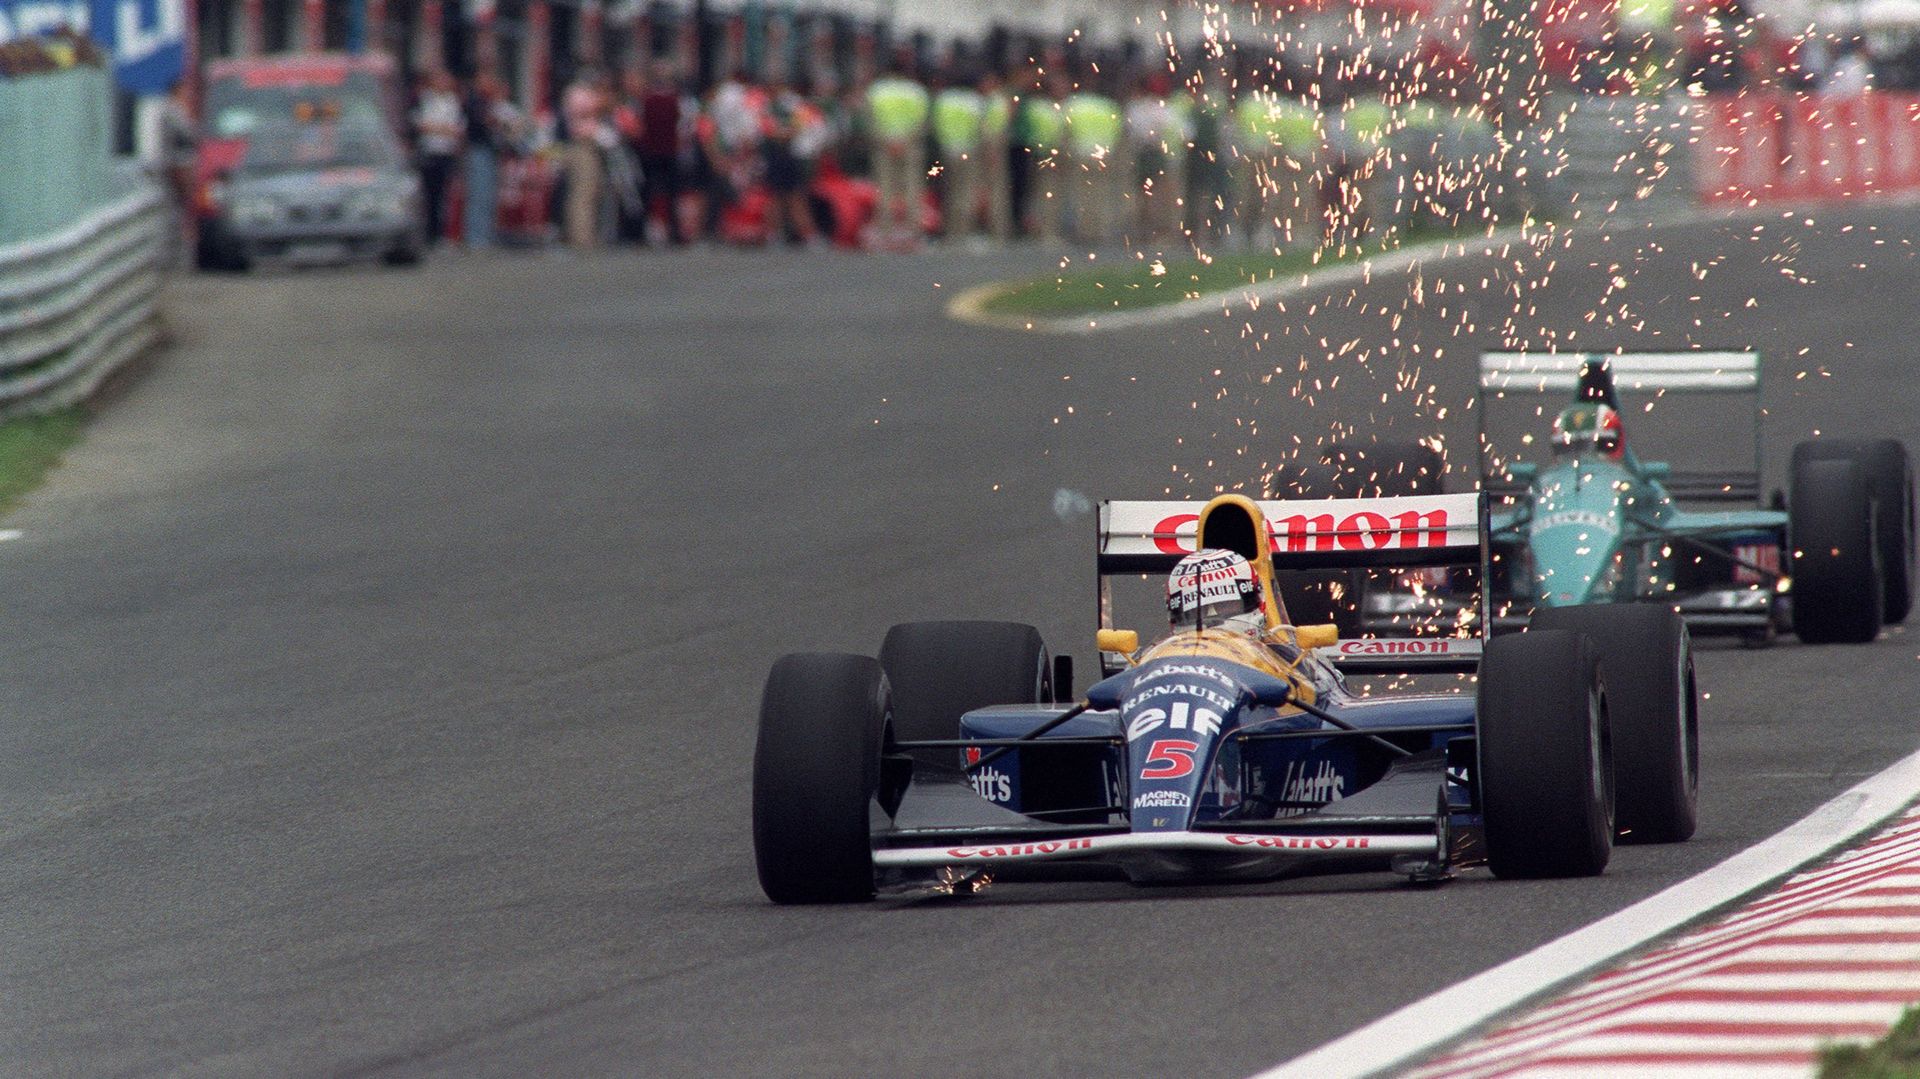 F1 : Image d'illustration de Nigel Mansell en 1992